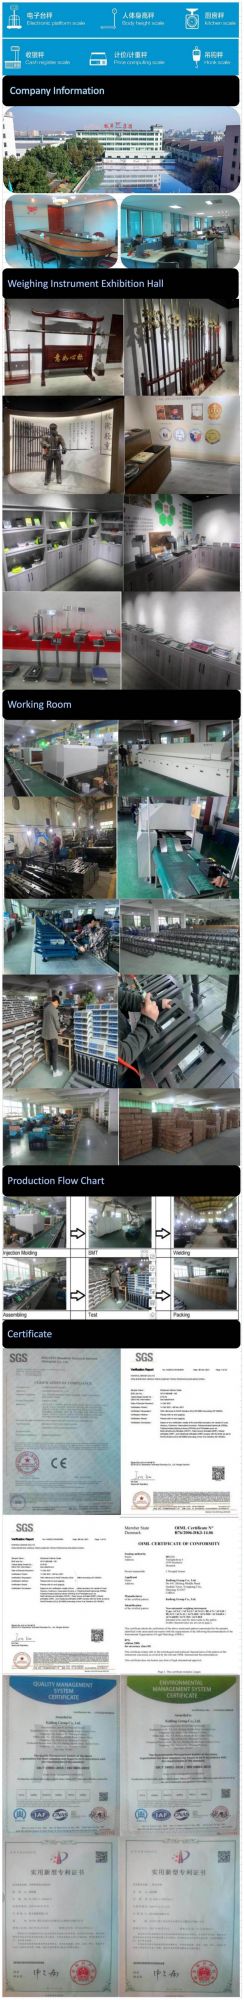 Professional Digital Electronic Weighing Scale Yongkang Factory